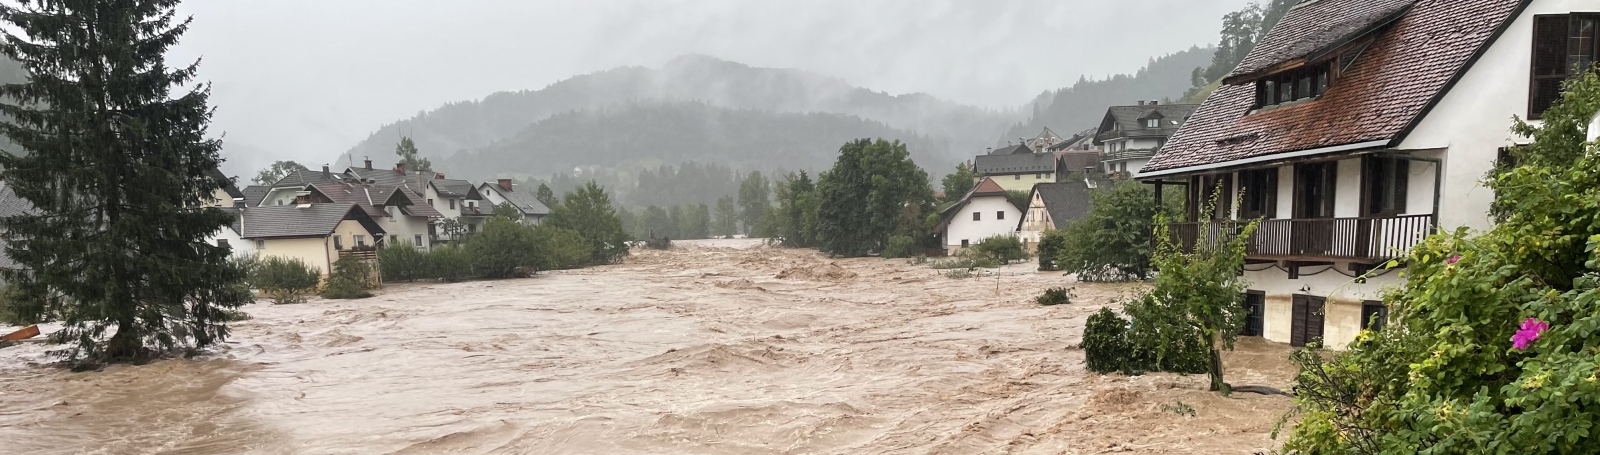 Massive Floods in Slovenia